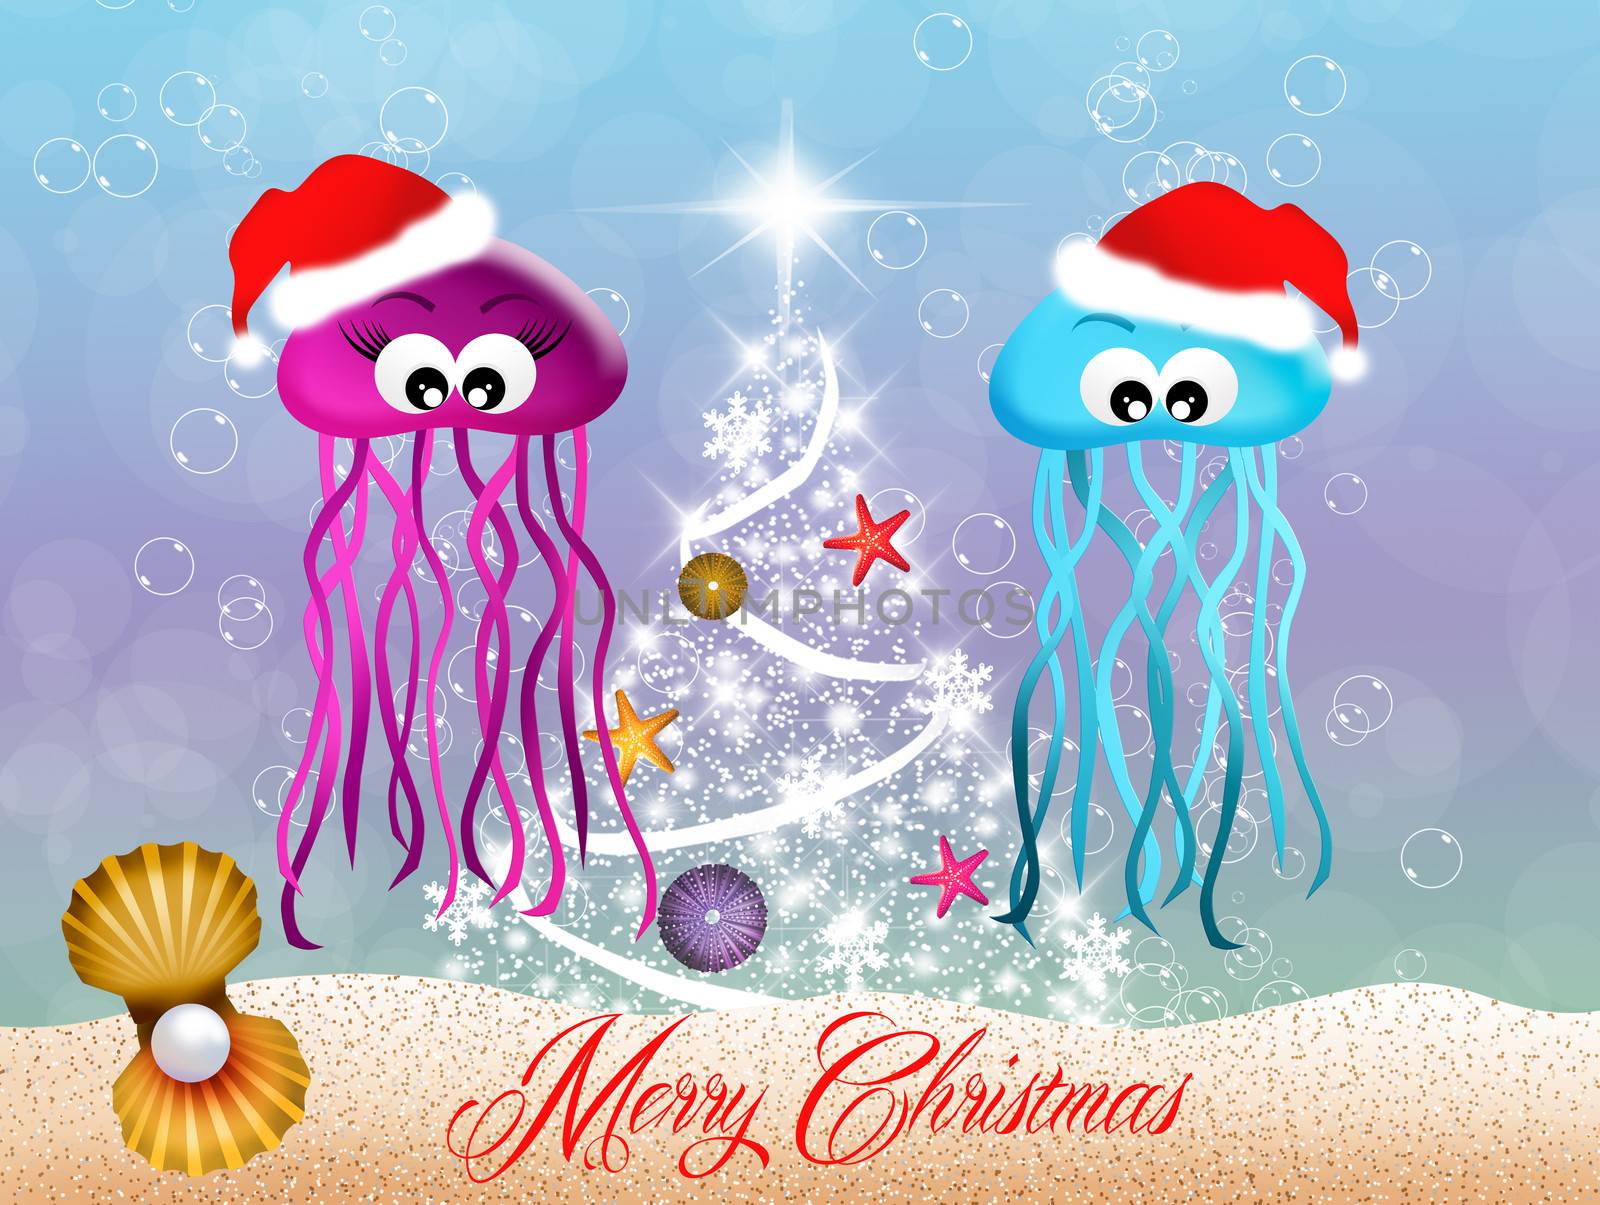 Jellyfishes celebrate Christmas